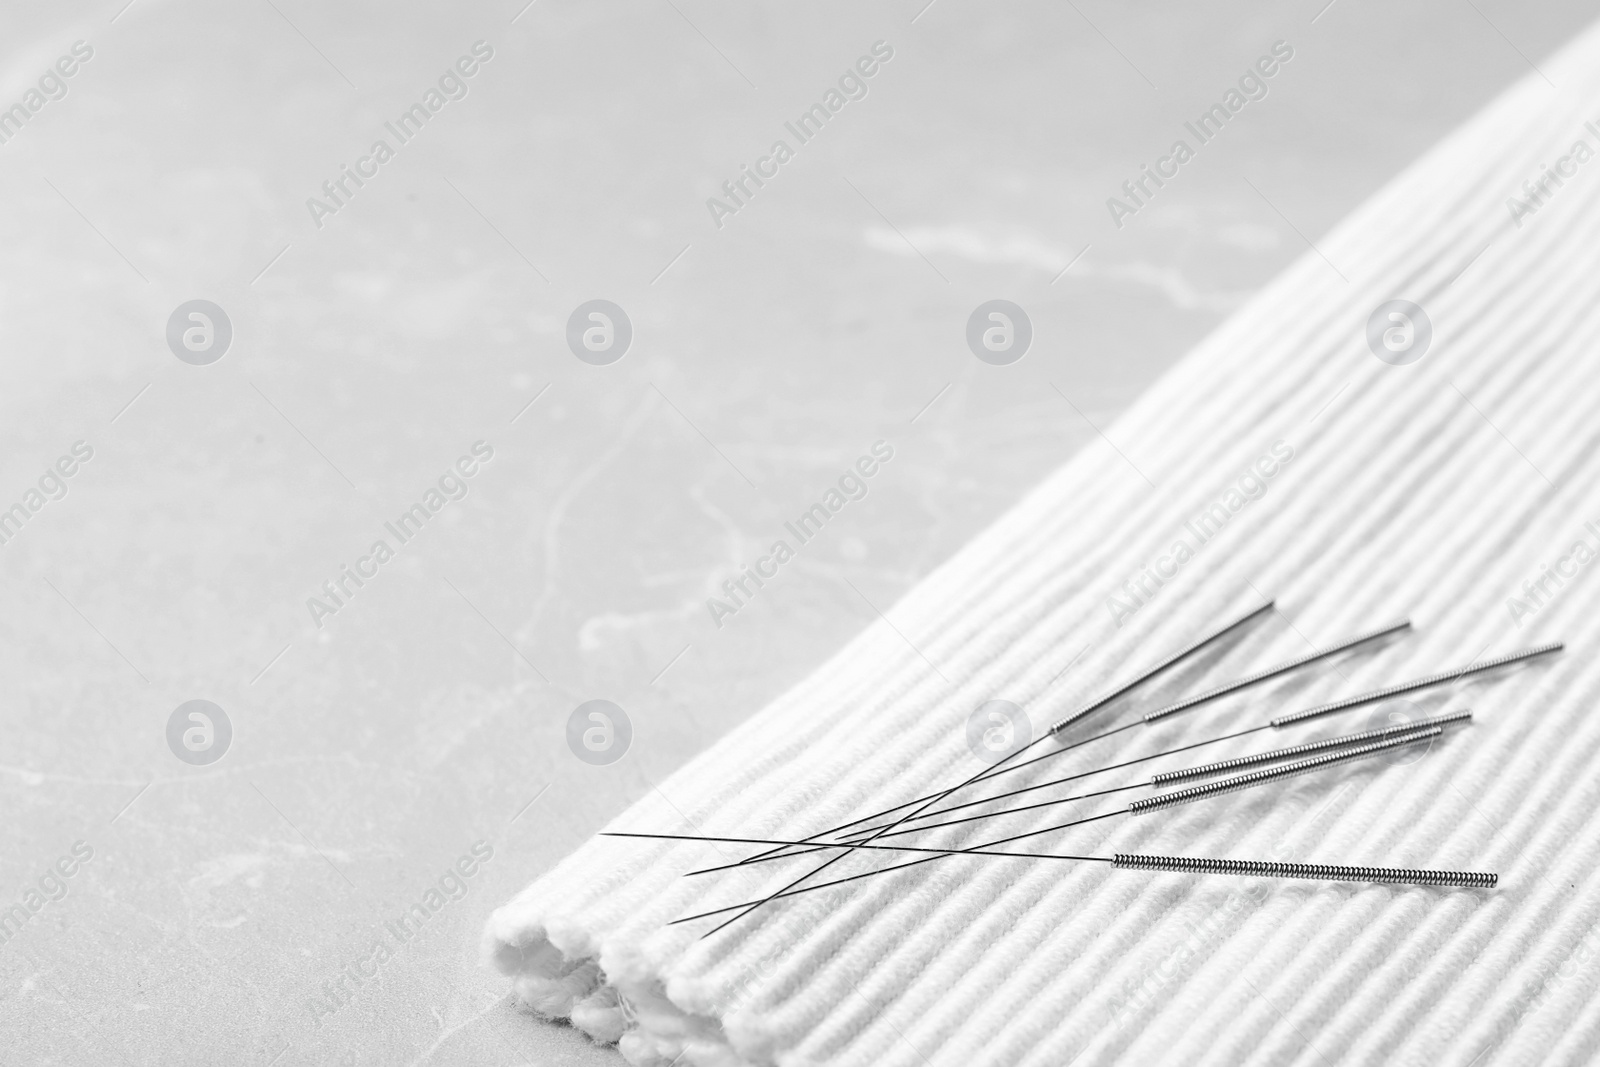 Photo of Acupuncture needles on towel, closeup. Alternative medicine